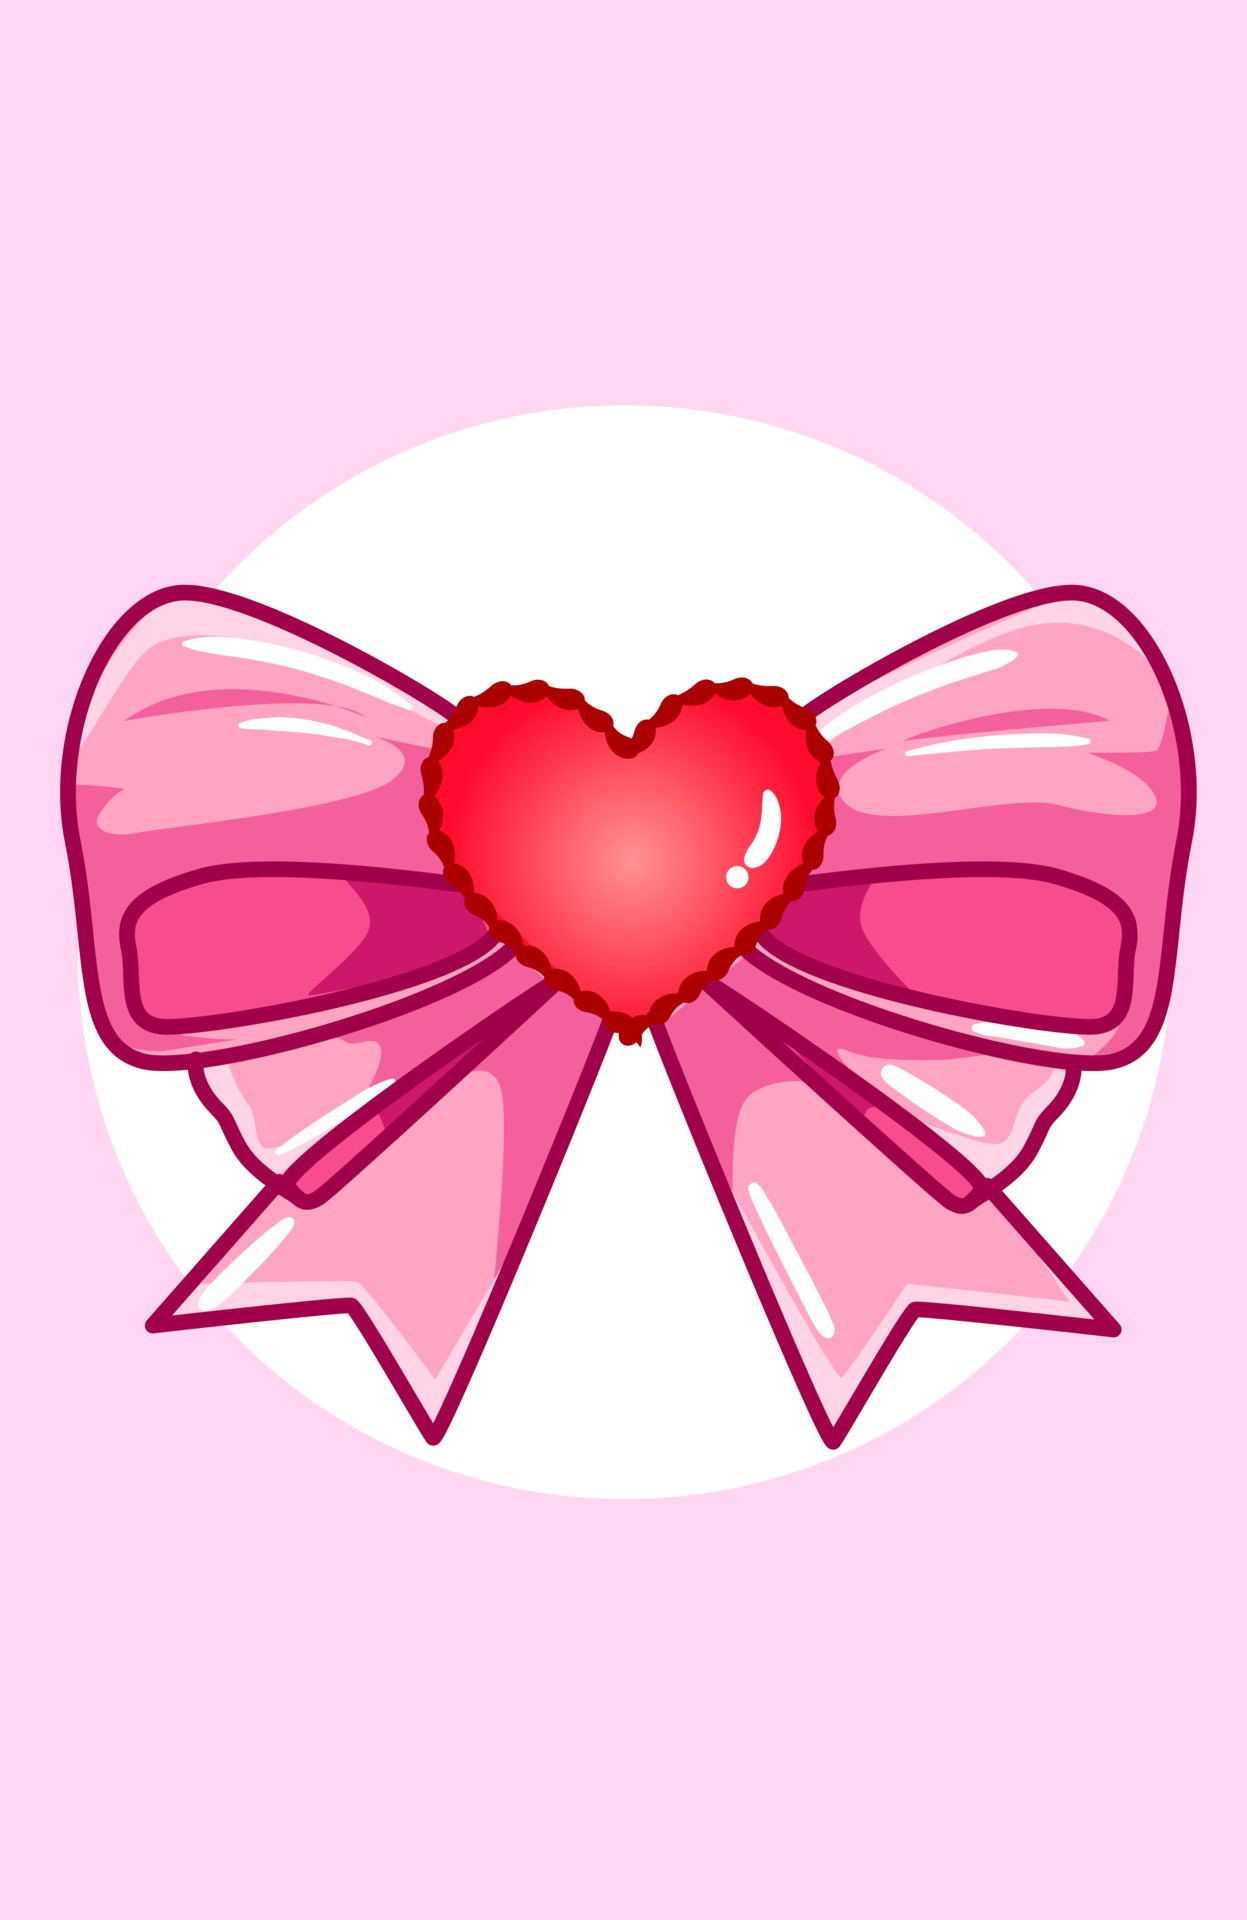 Kawaii ribbon with heart, valentine's day cartoon illustration